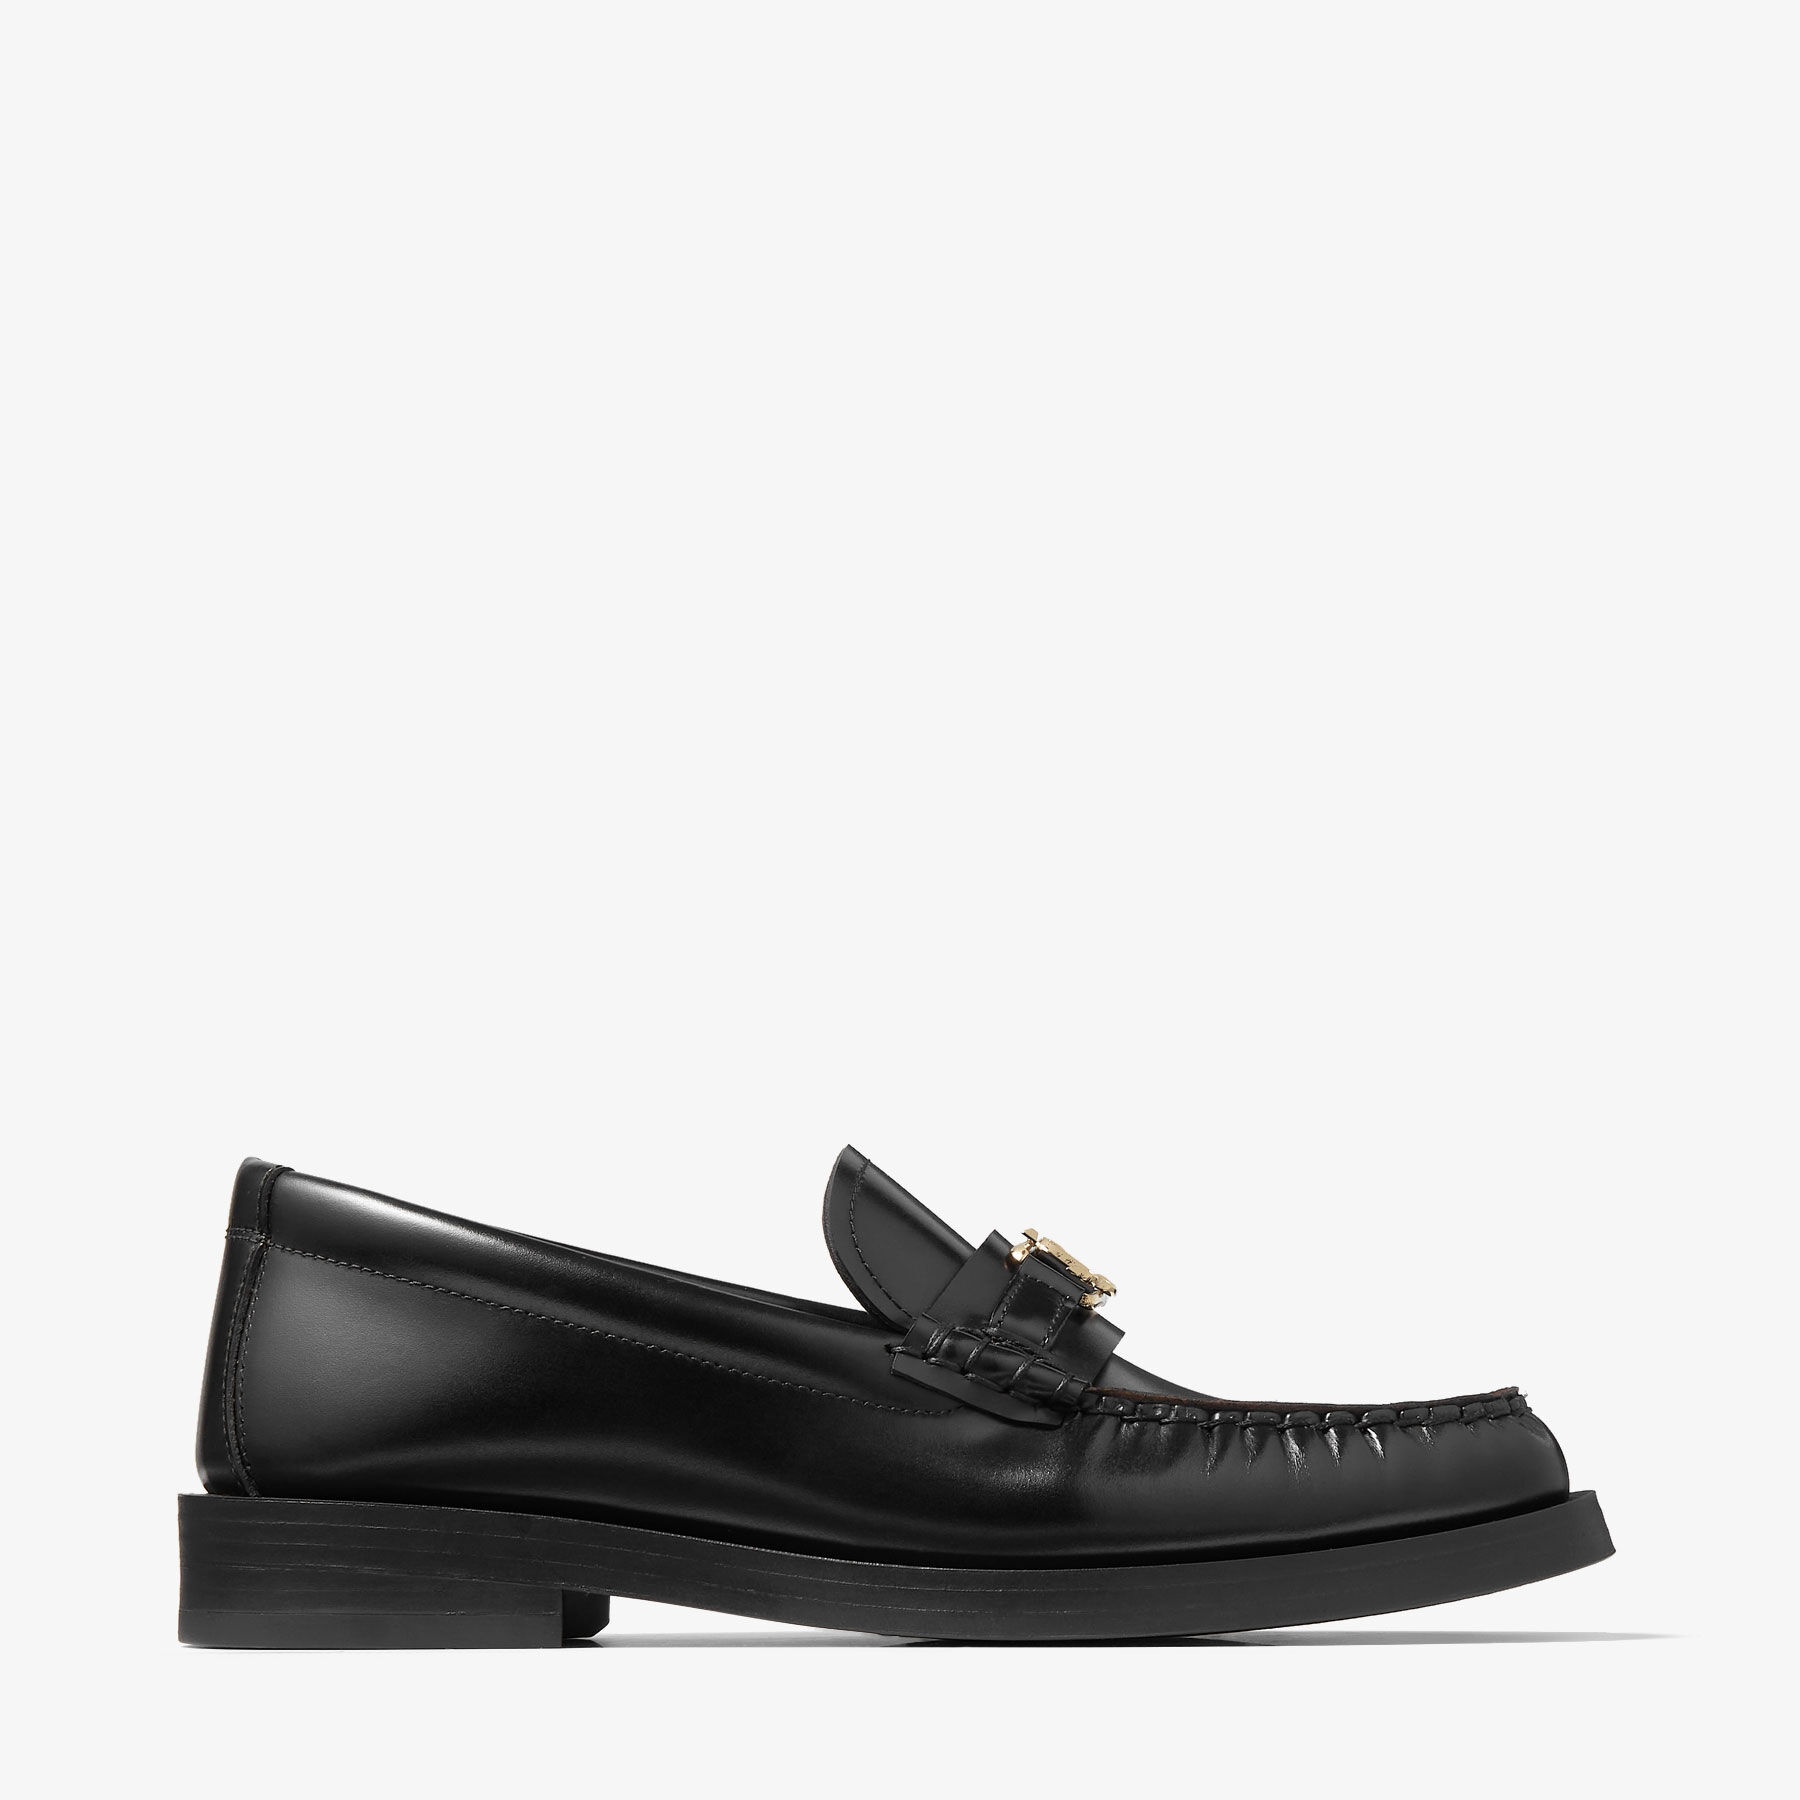 Addie/JC
Black Box Calf Leather Flat Loafers with JC Emblem - 1